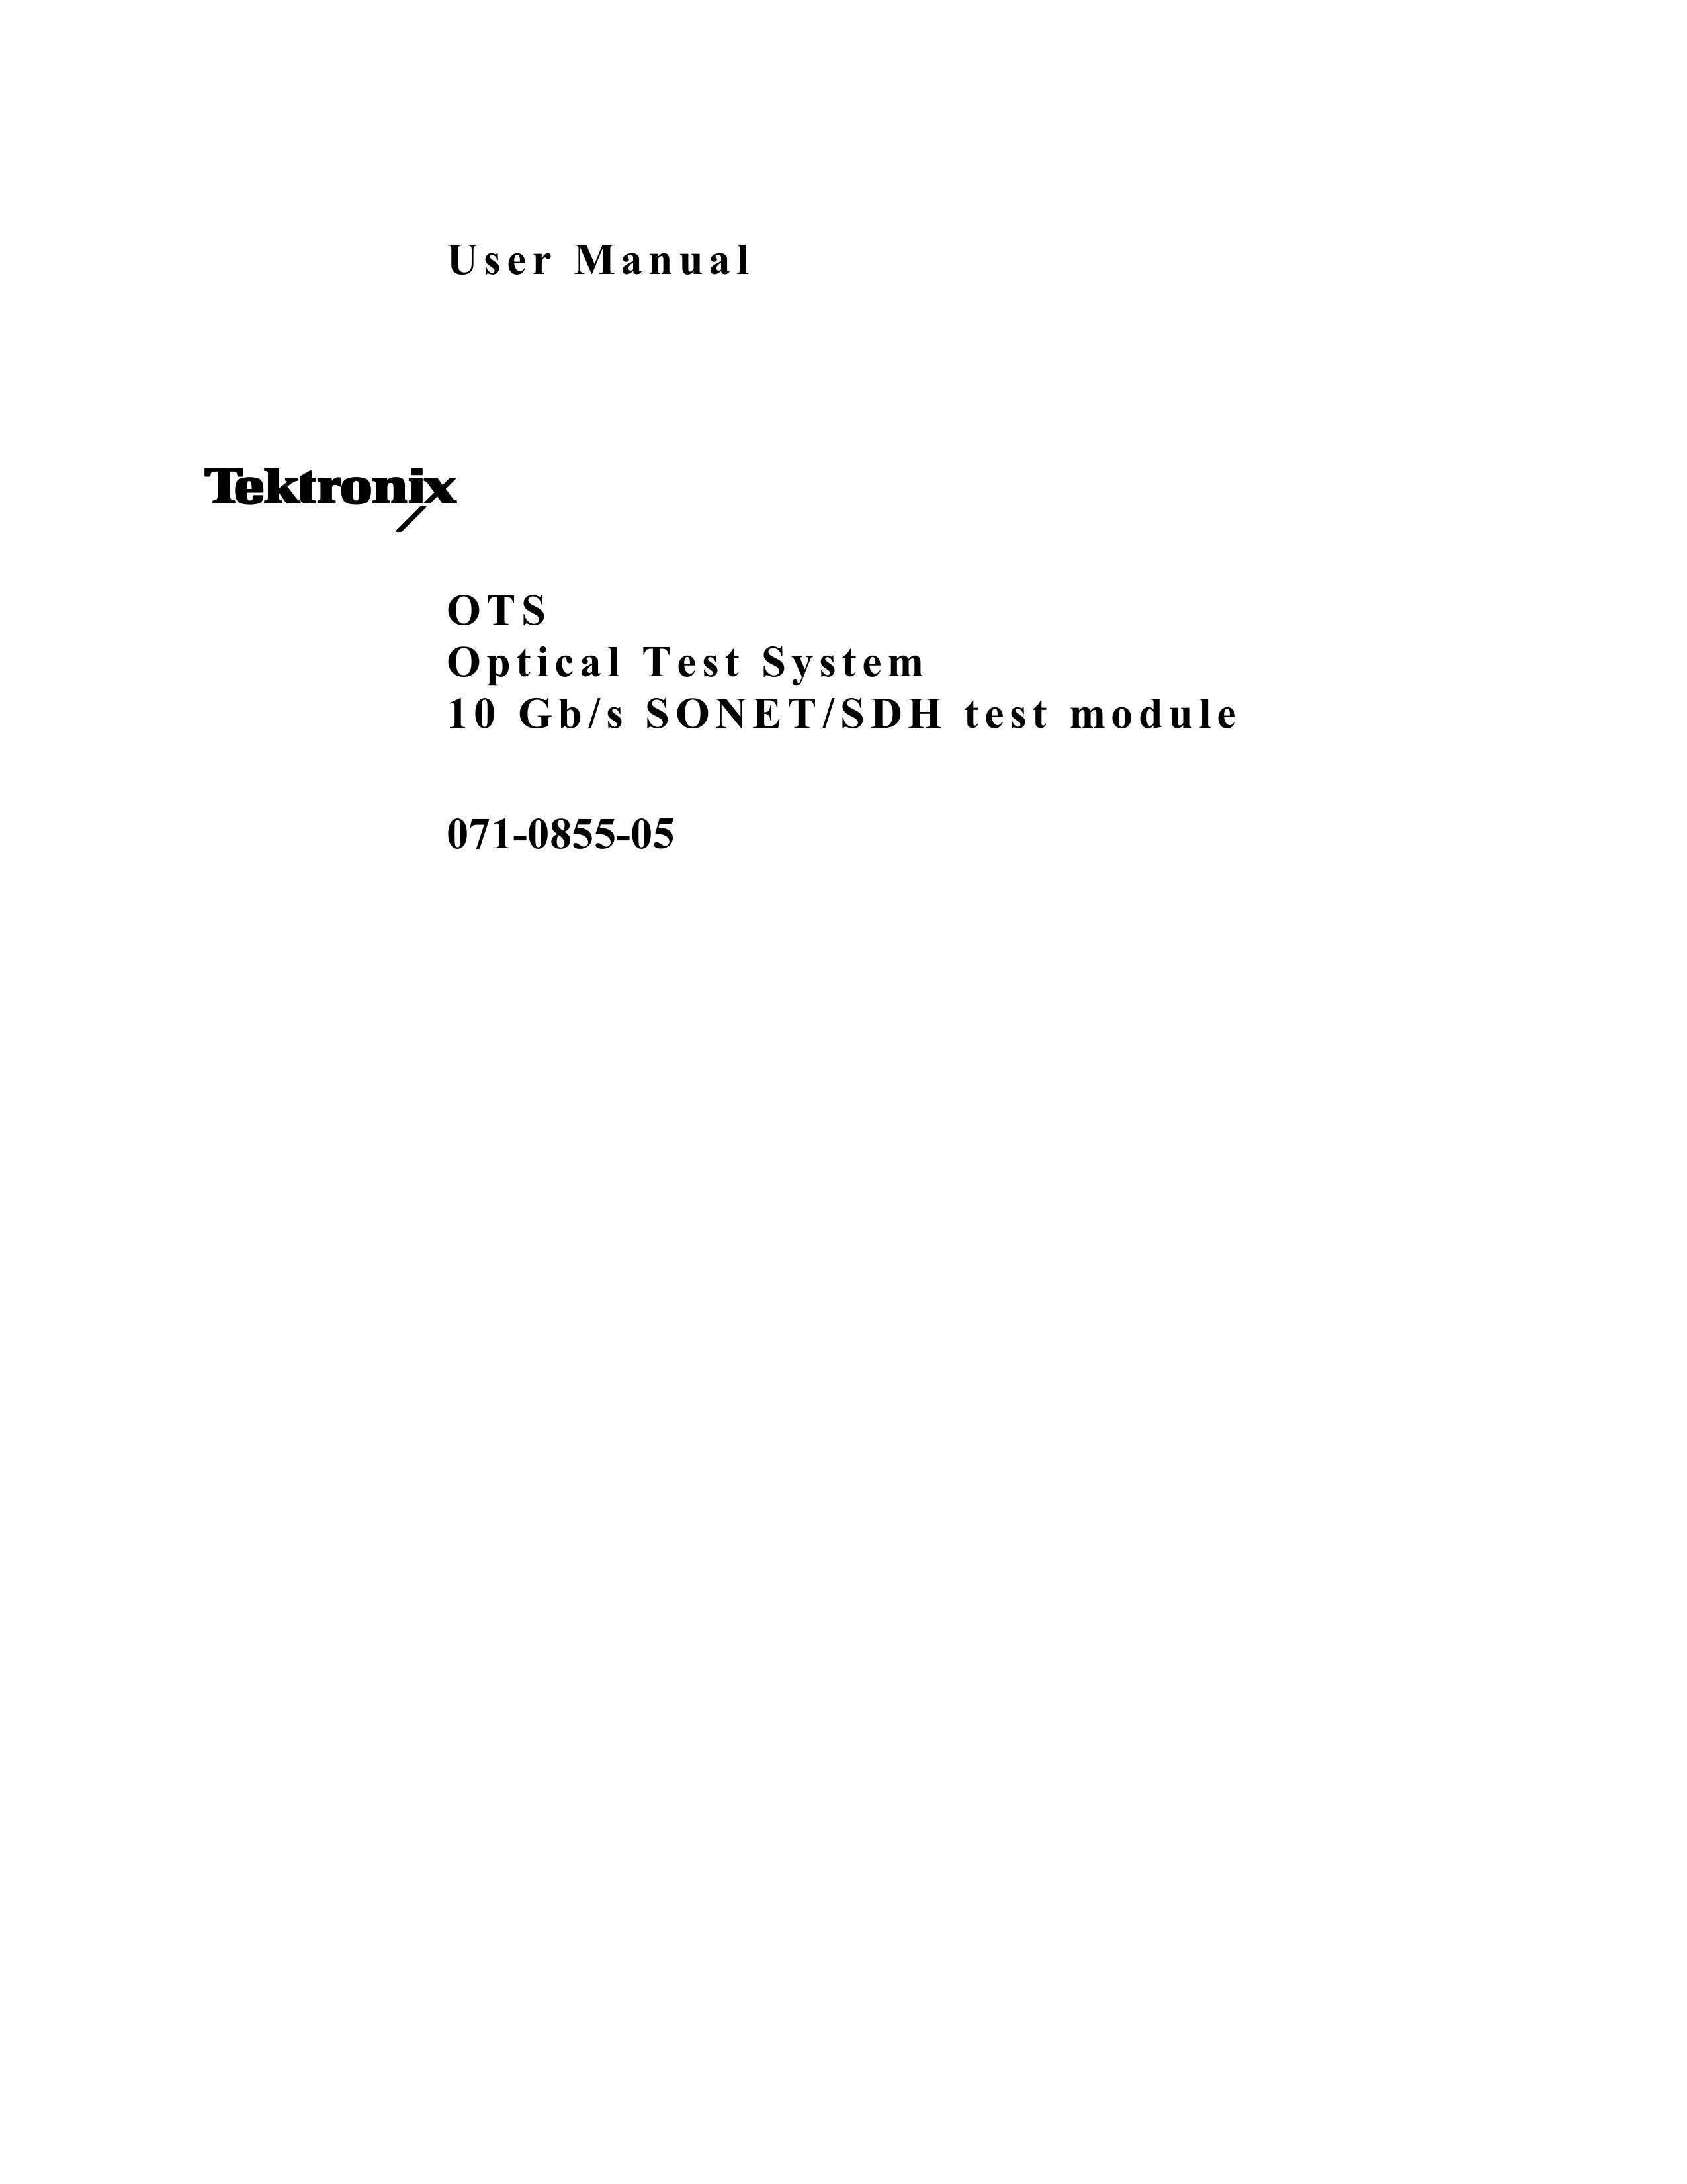 Tektronix 071-0855-05 Telescope User Manual